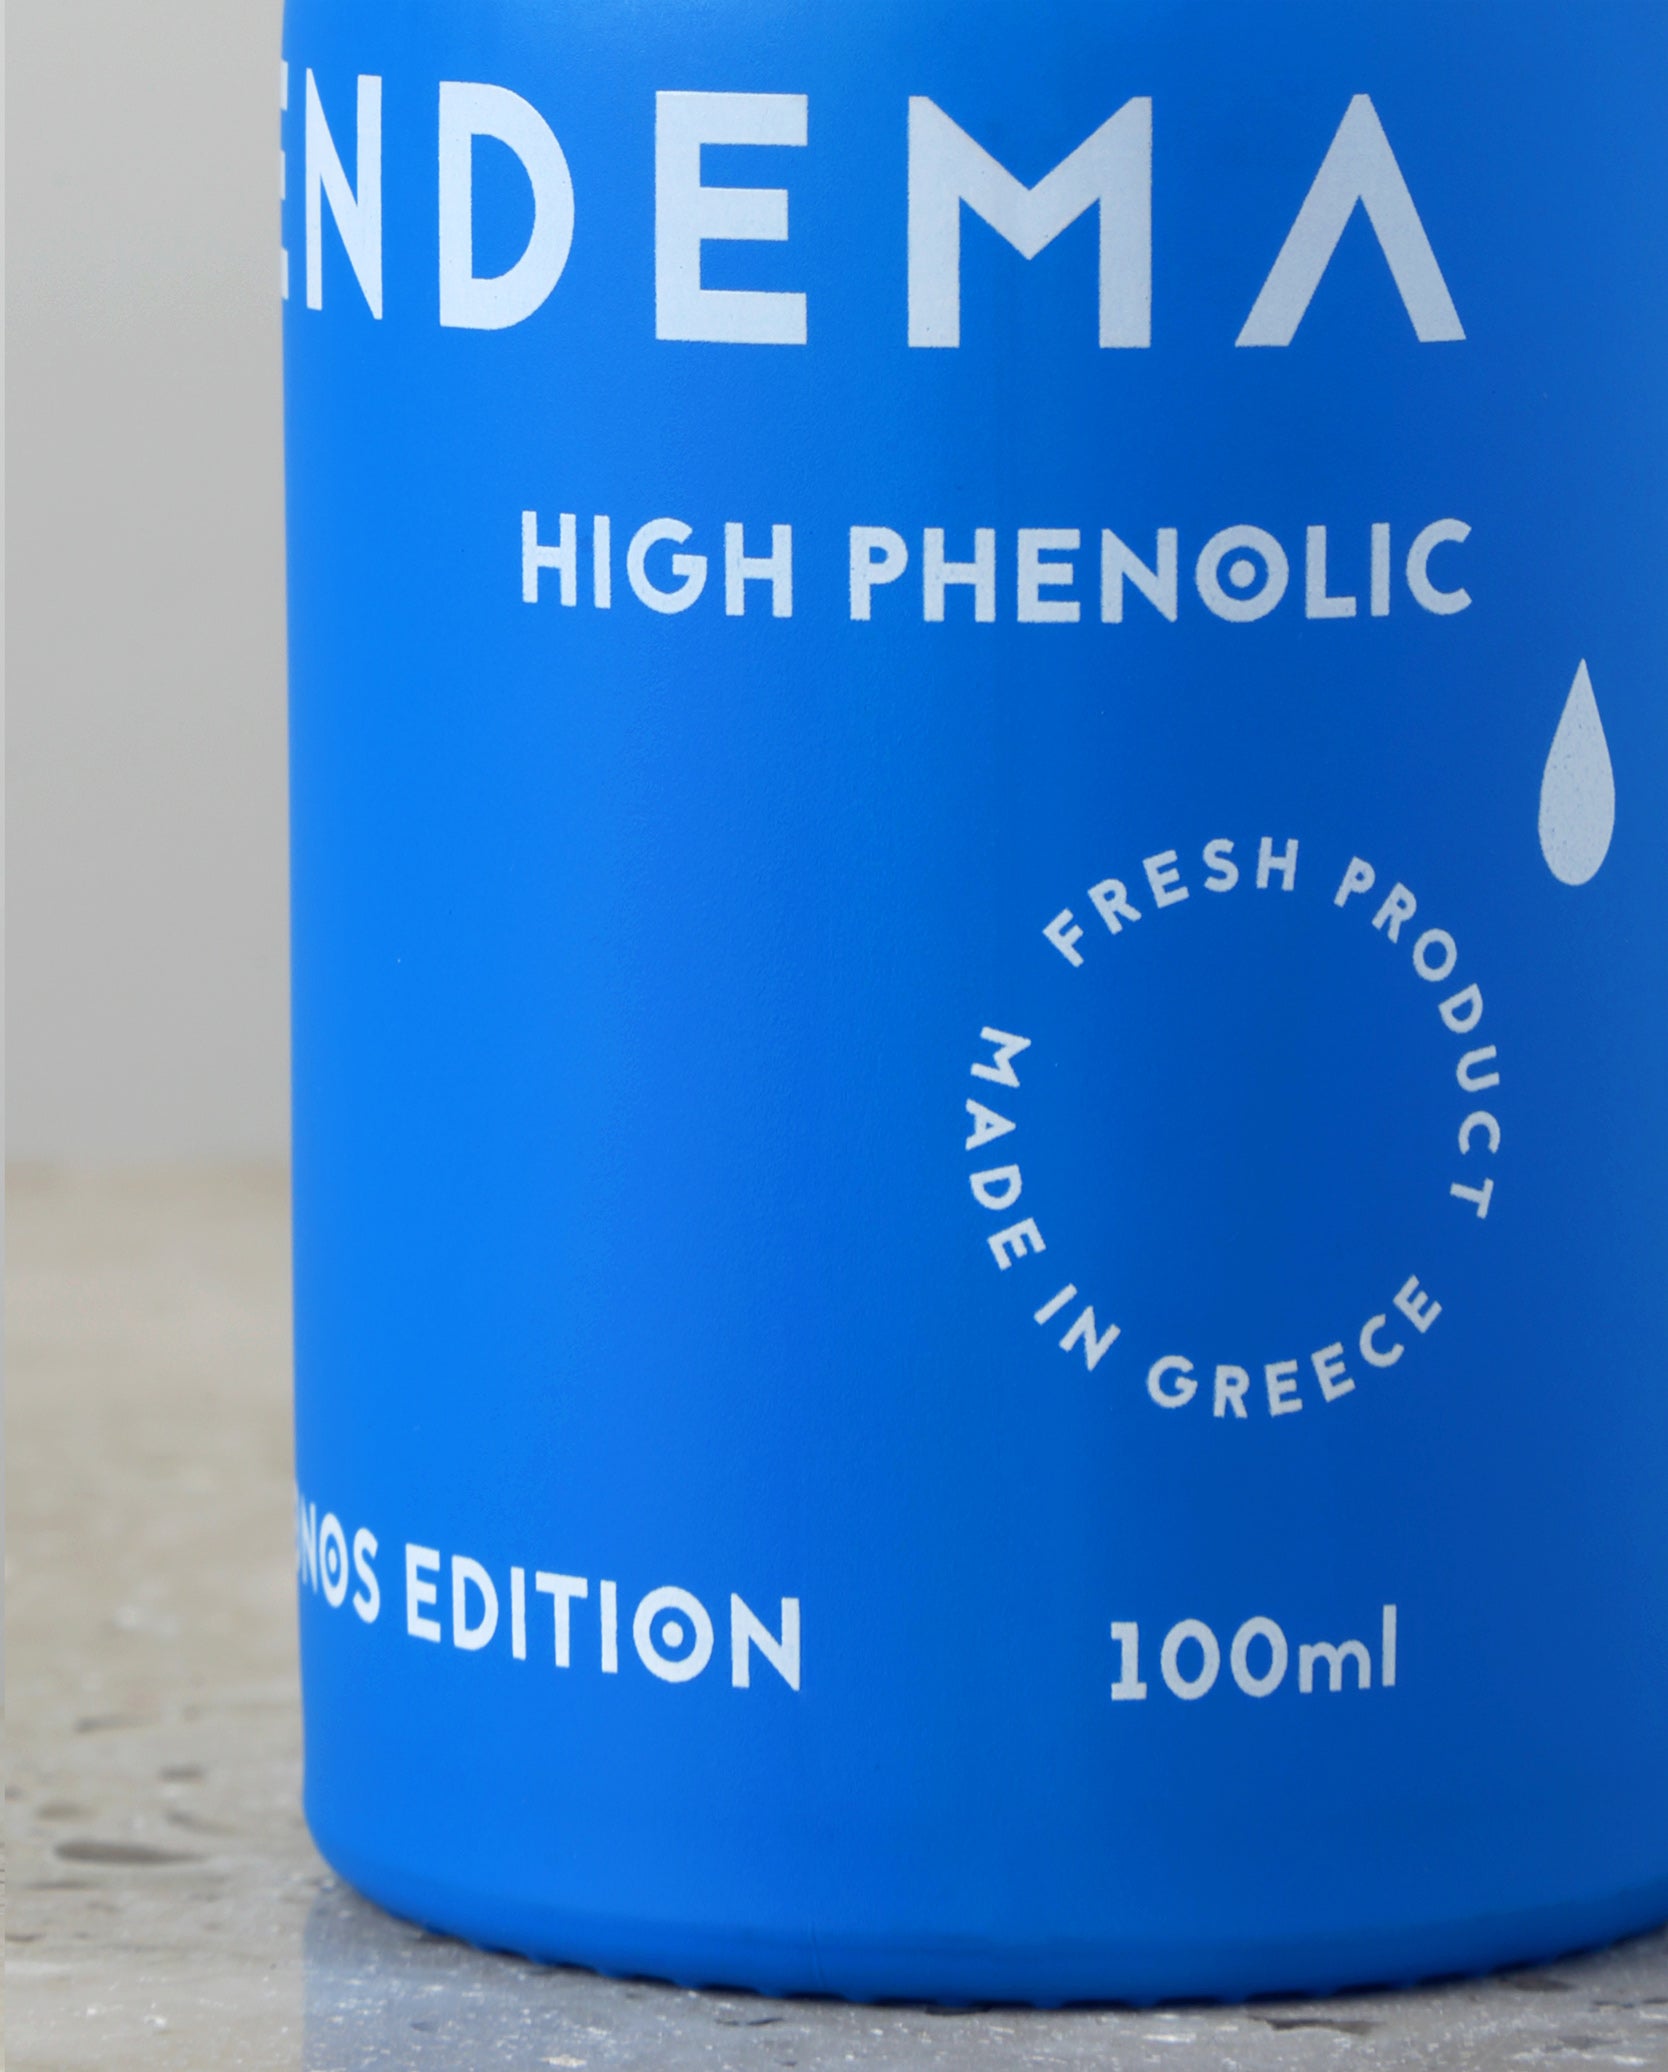 Close-Up of Vendema High Phenolic Extra Virgin Olive Oil Bottle.